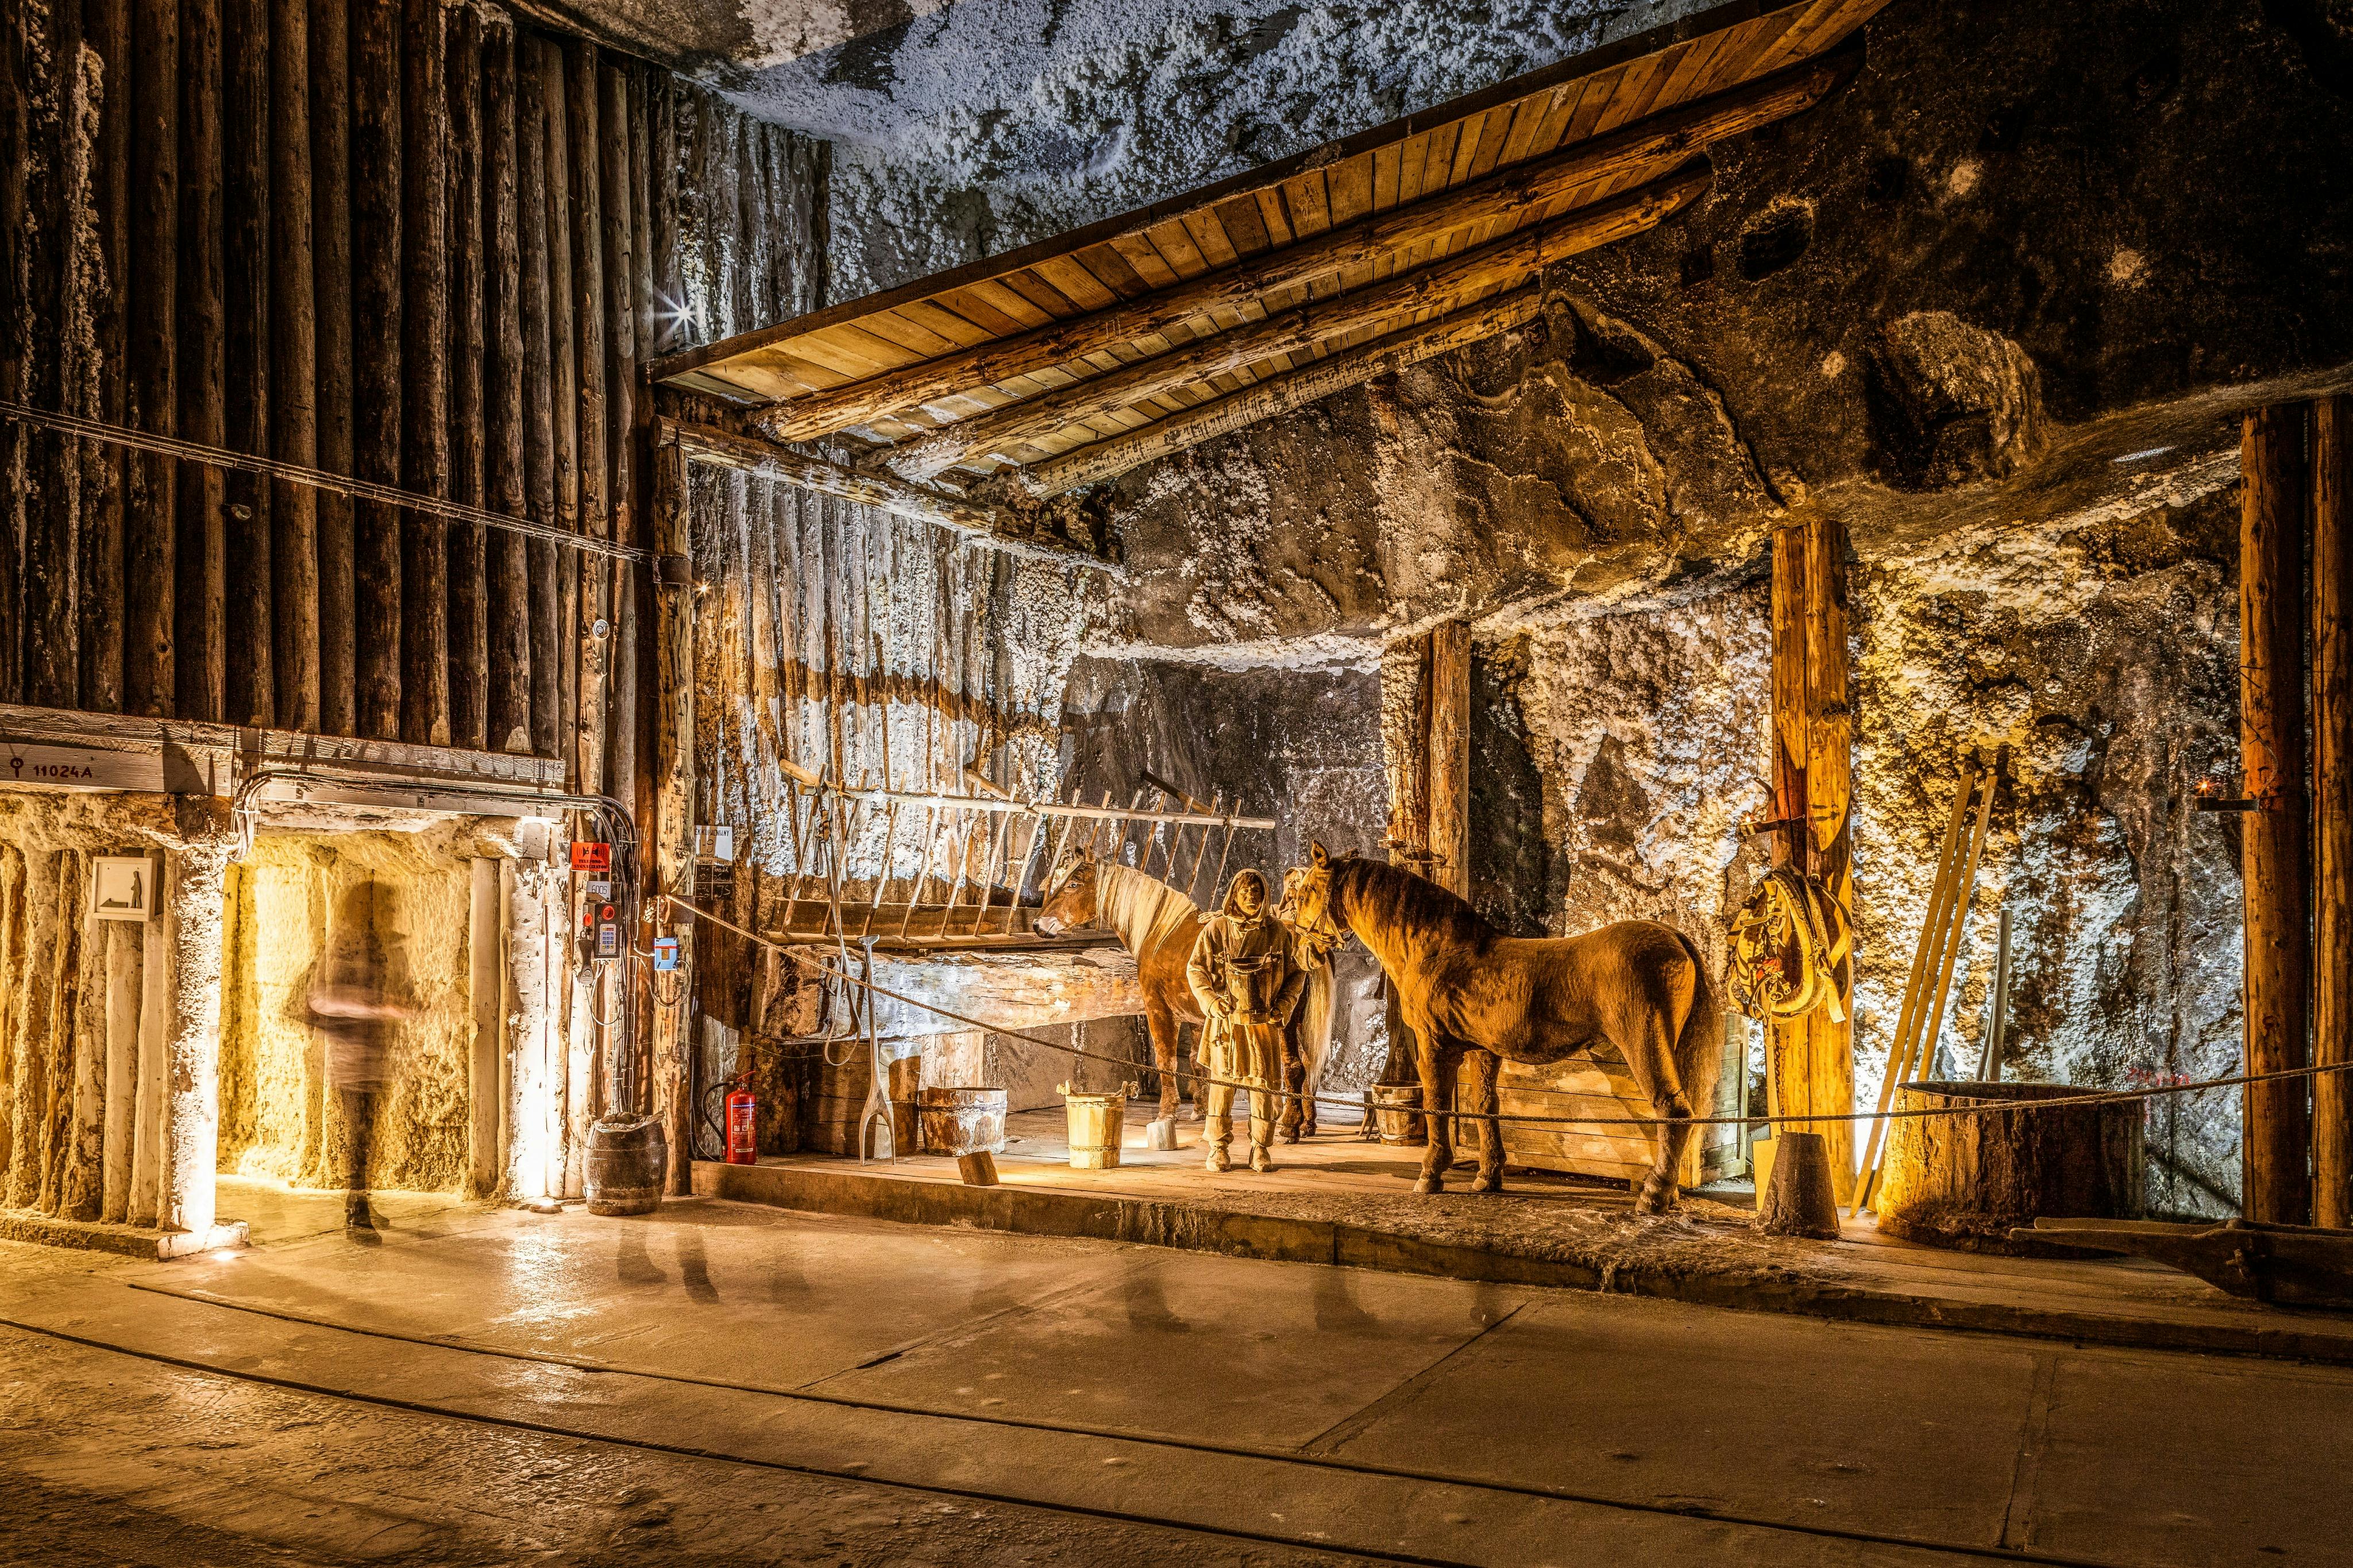 Wieliczka Salt Mine: Entry Ticket, Guided Tour + Direct Transfer